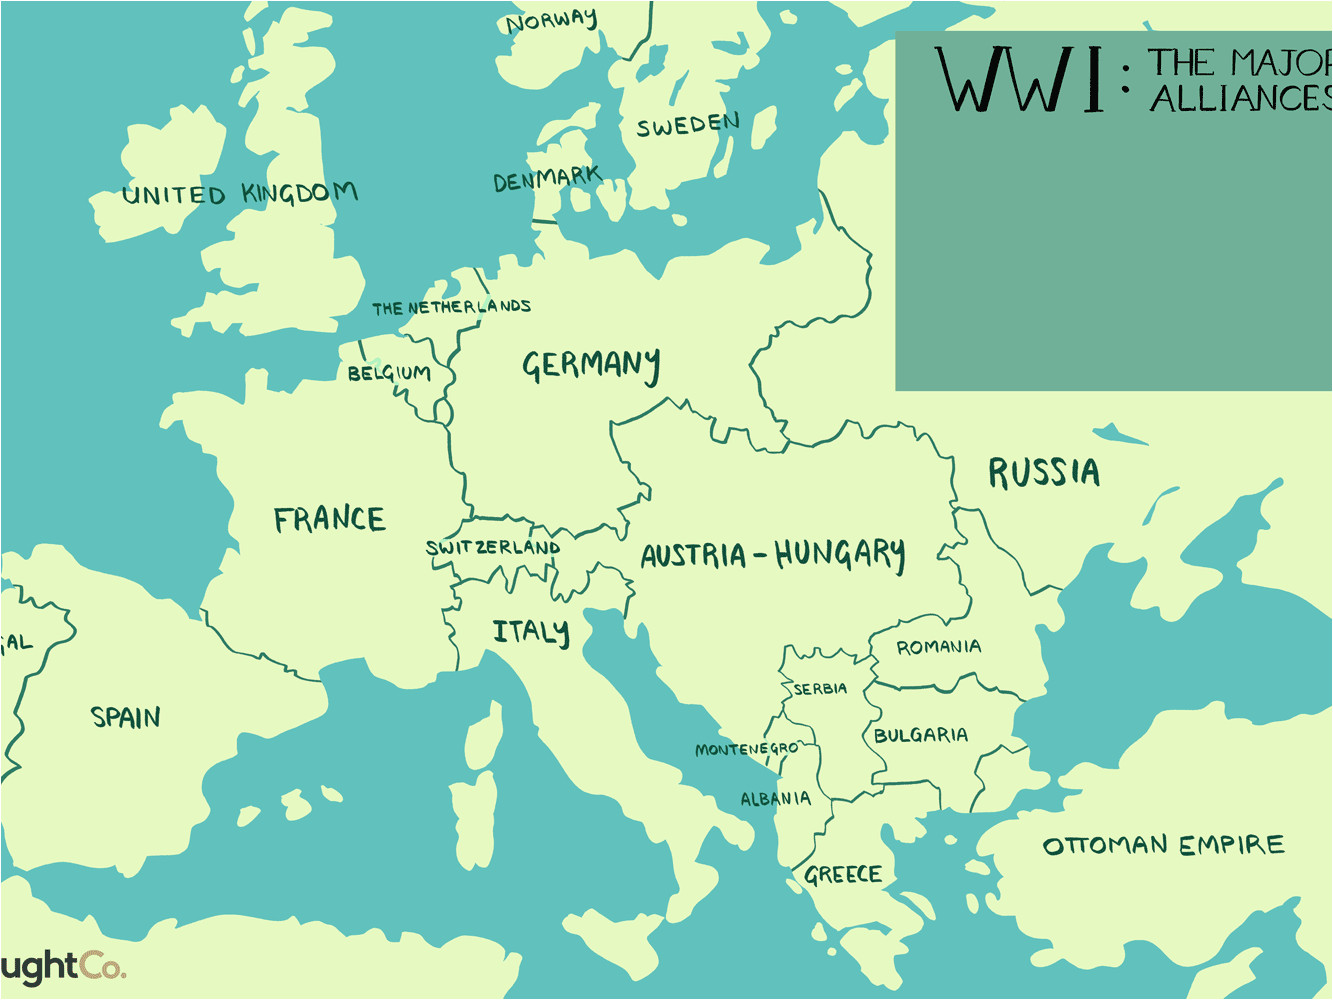 the major alliances of world war i